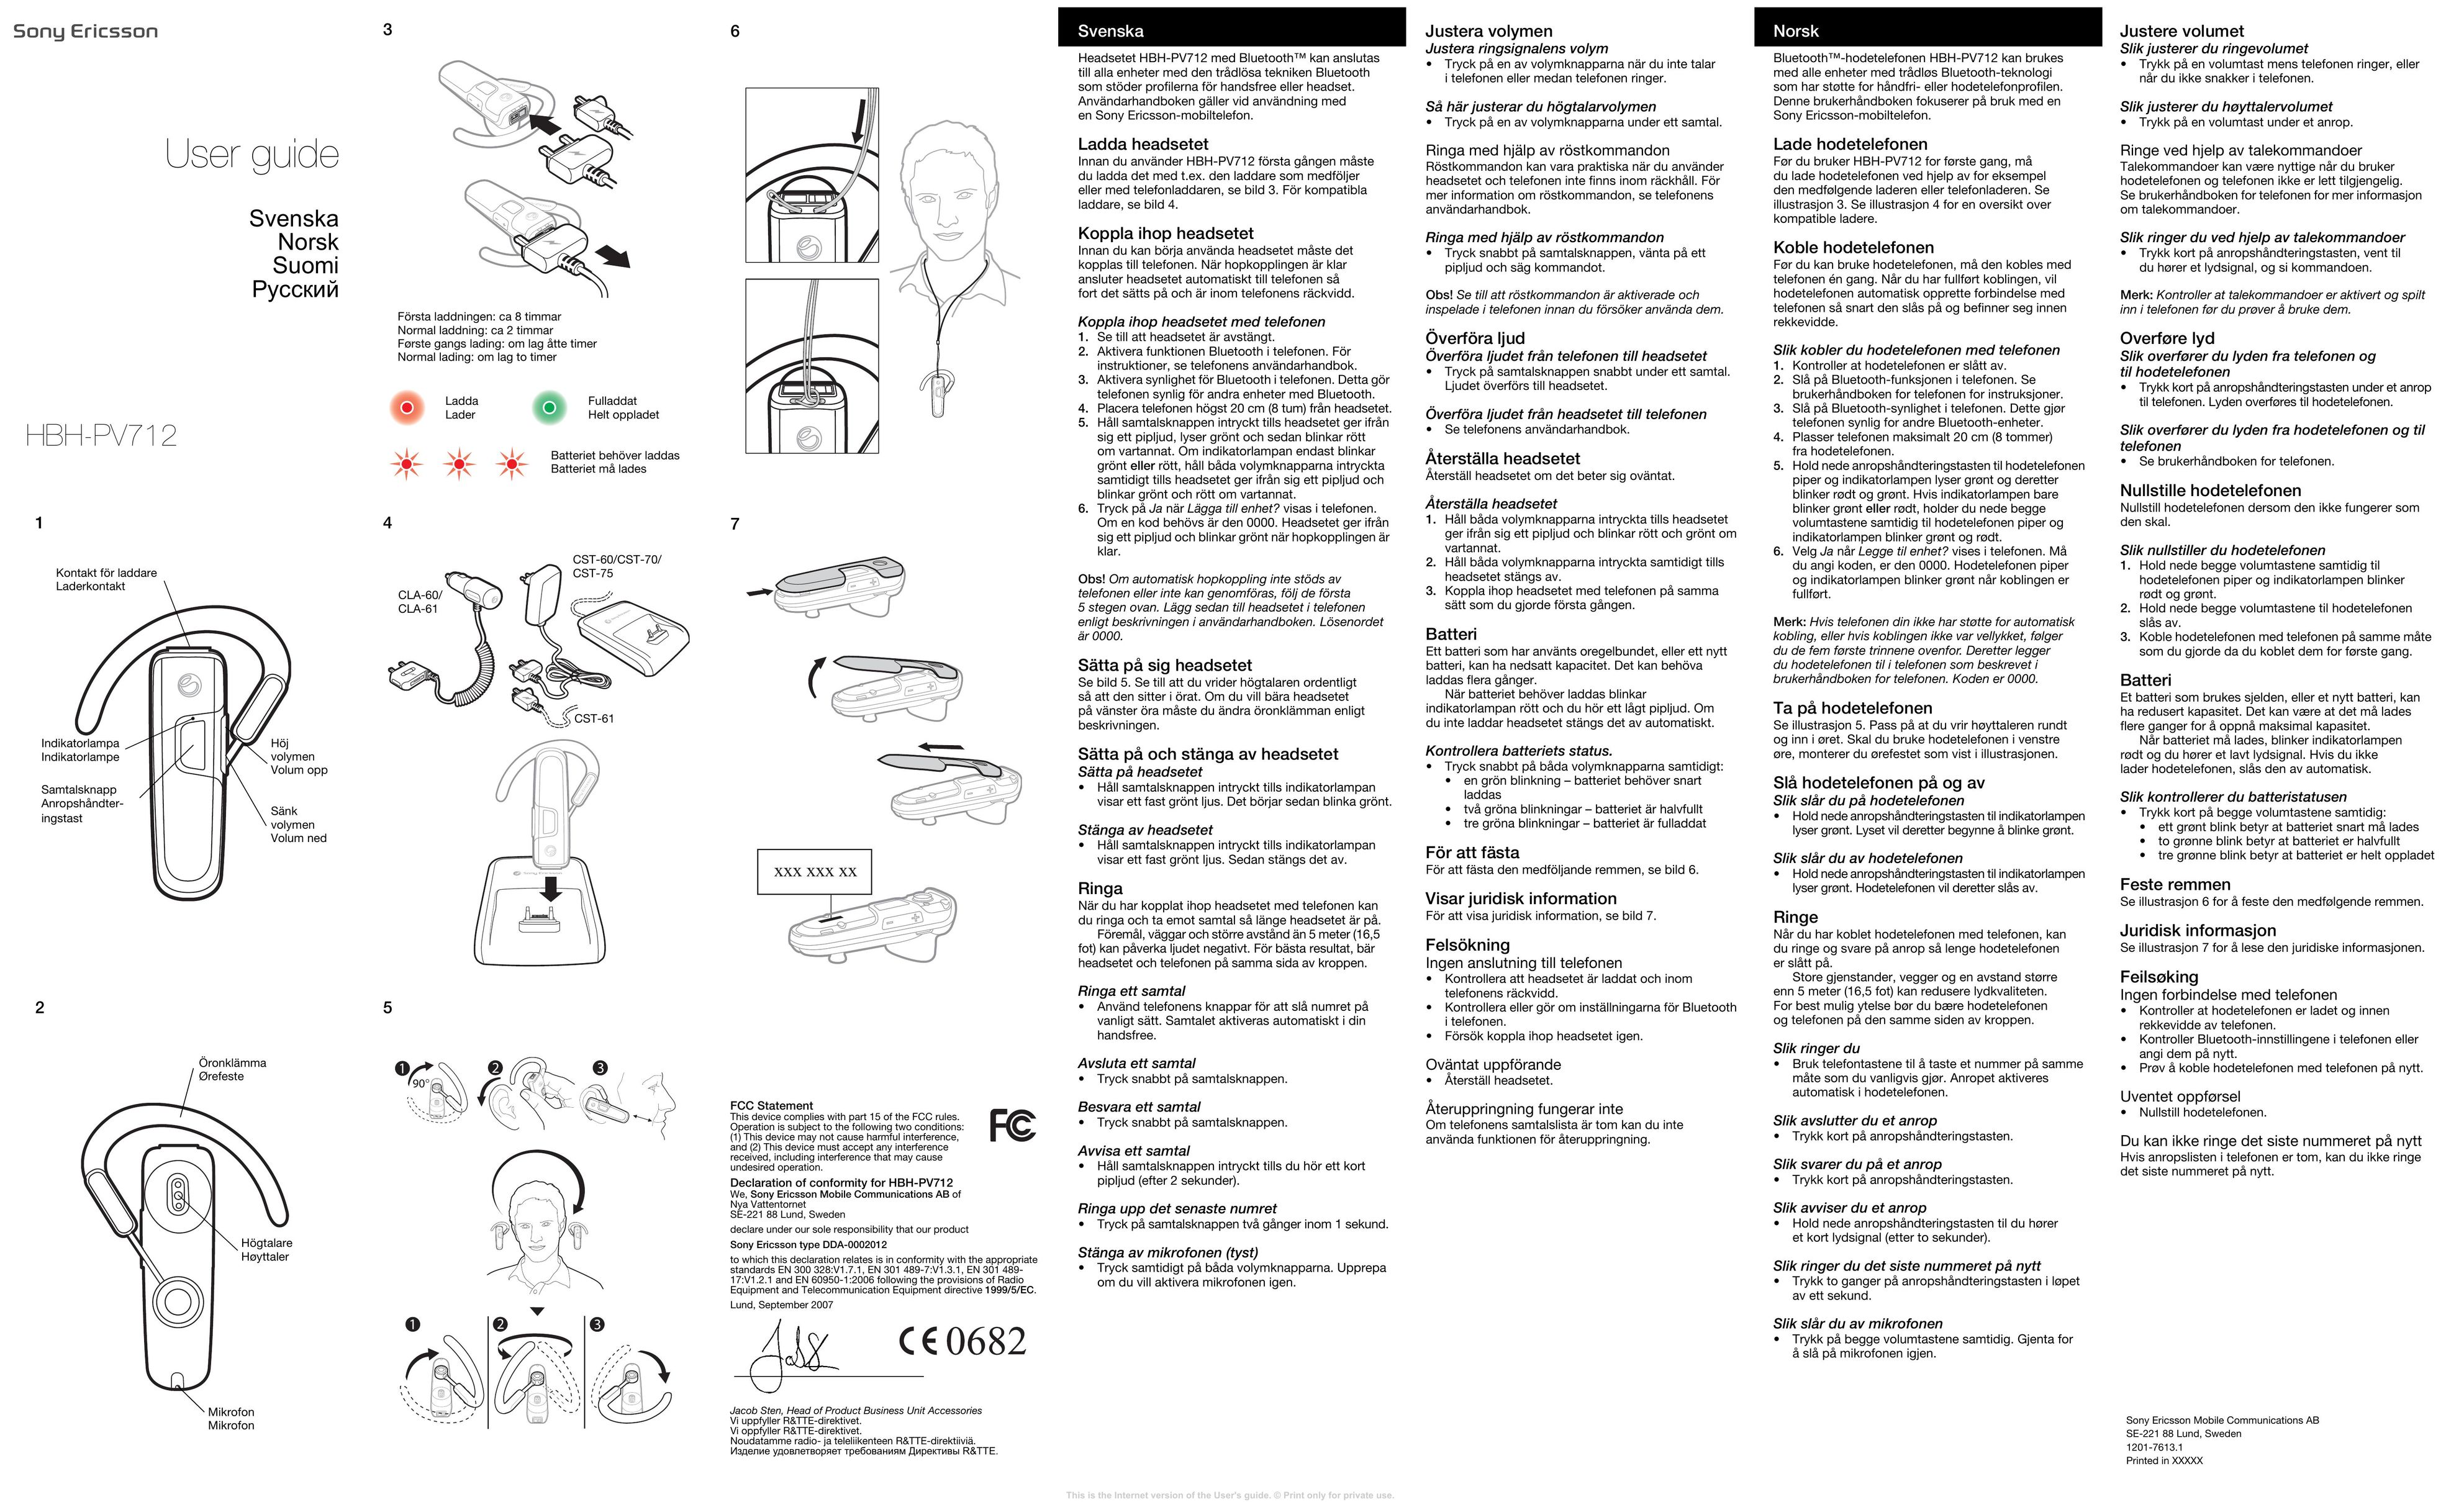 SpectraLink HBH-PV712 Bluetooth Headset User Manual